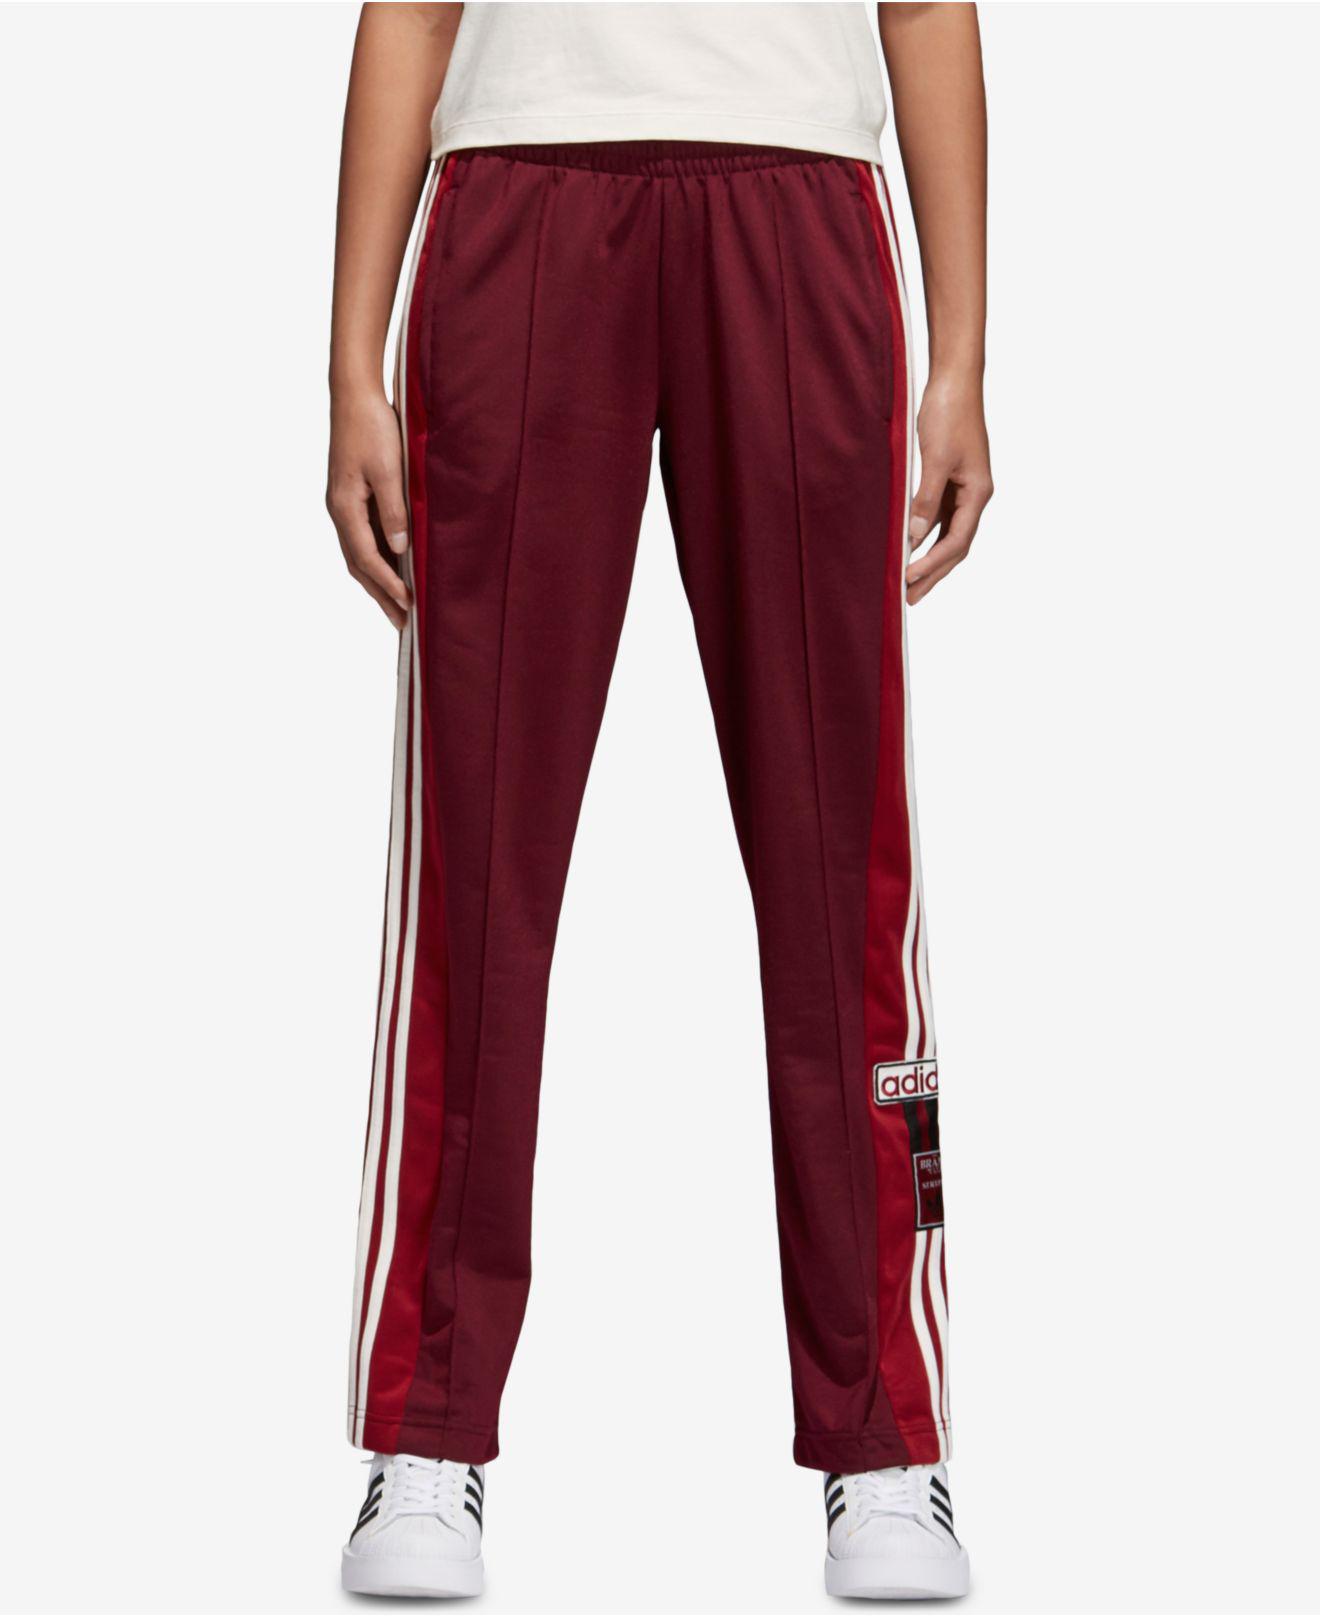 adidas Originals Adibreak Tearaway Track Pants in Maroon (Red) for Men -  Lyst